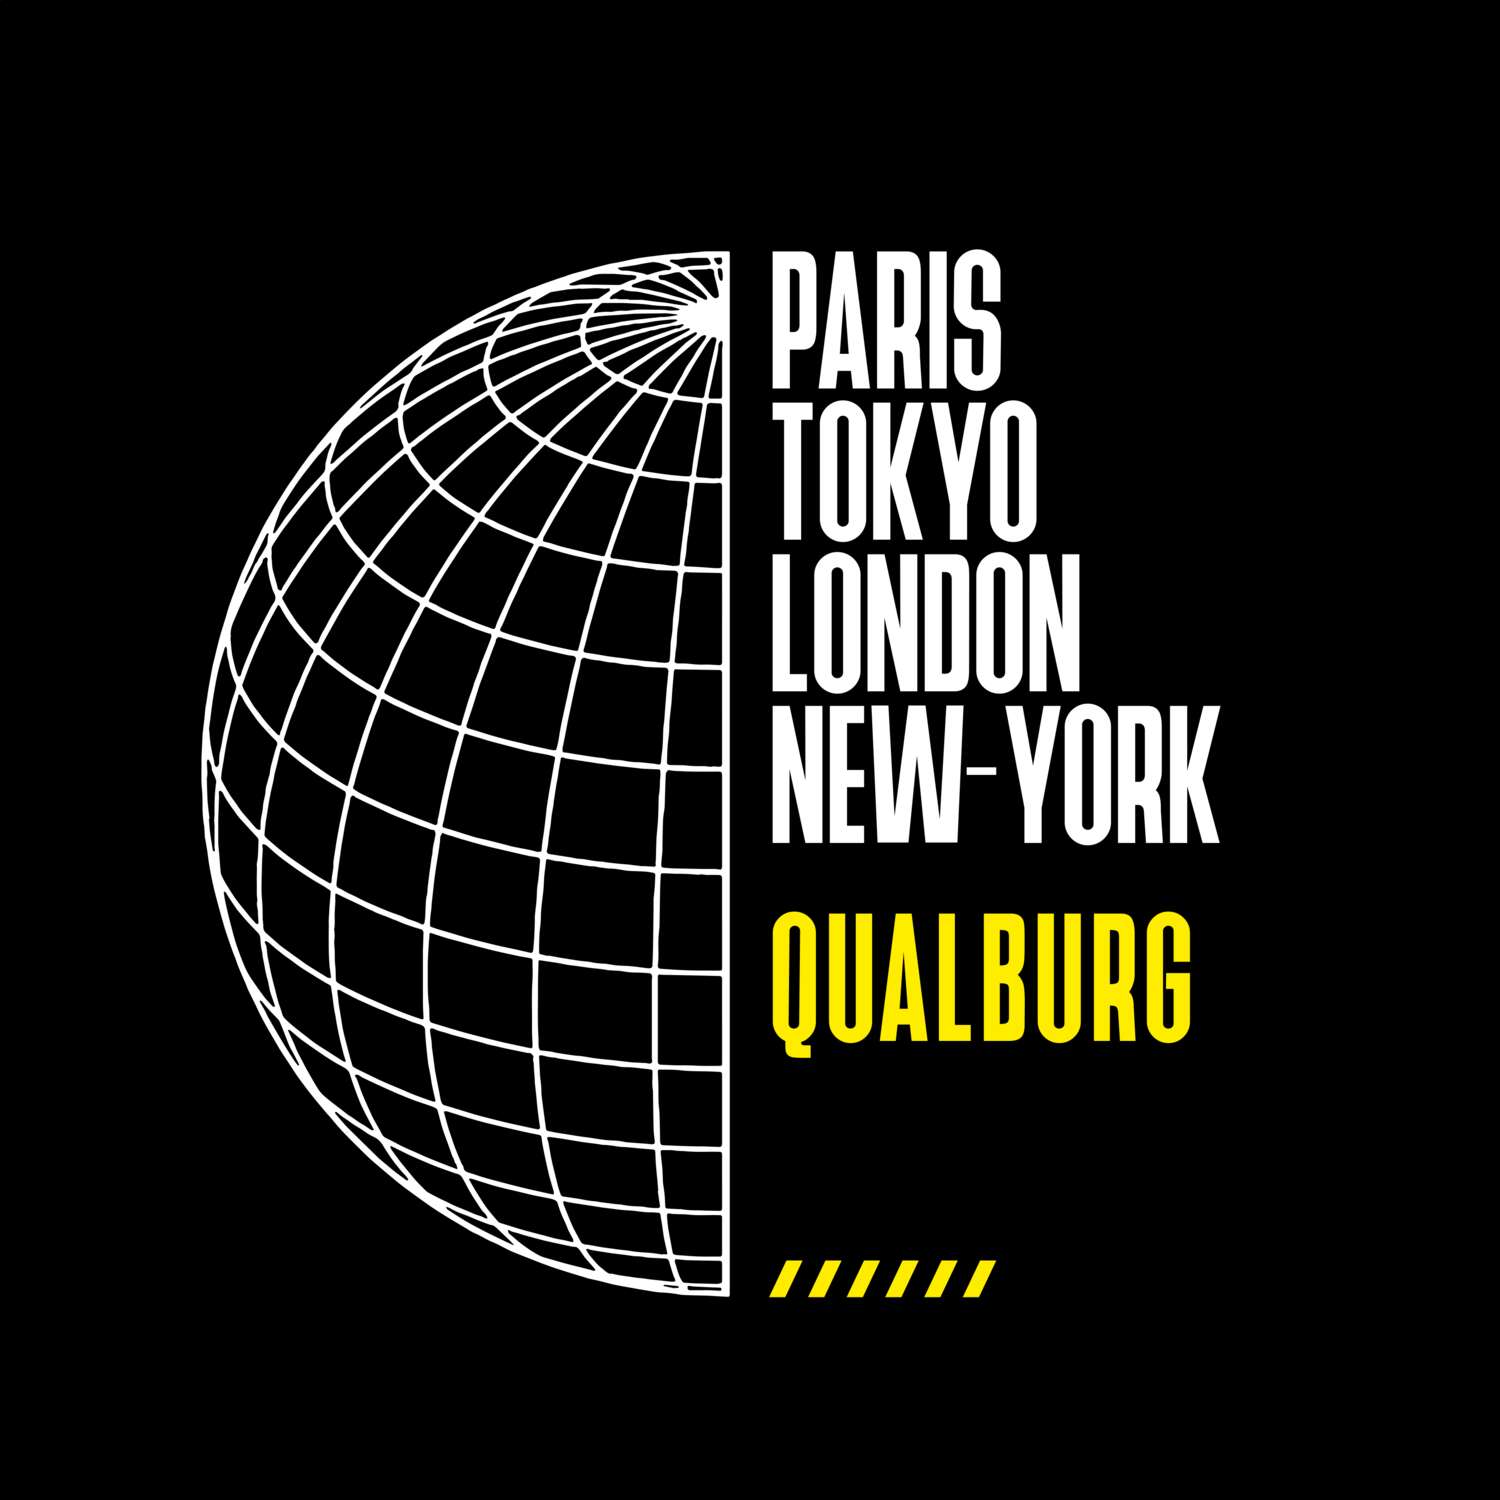 Qualburg T-Shirt »Paris Tokyo London«